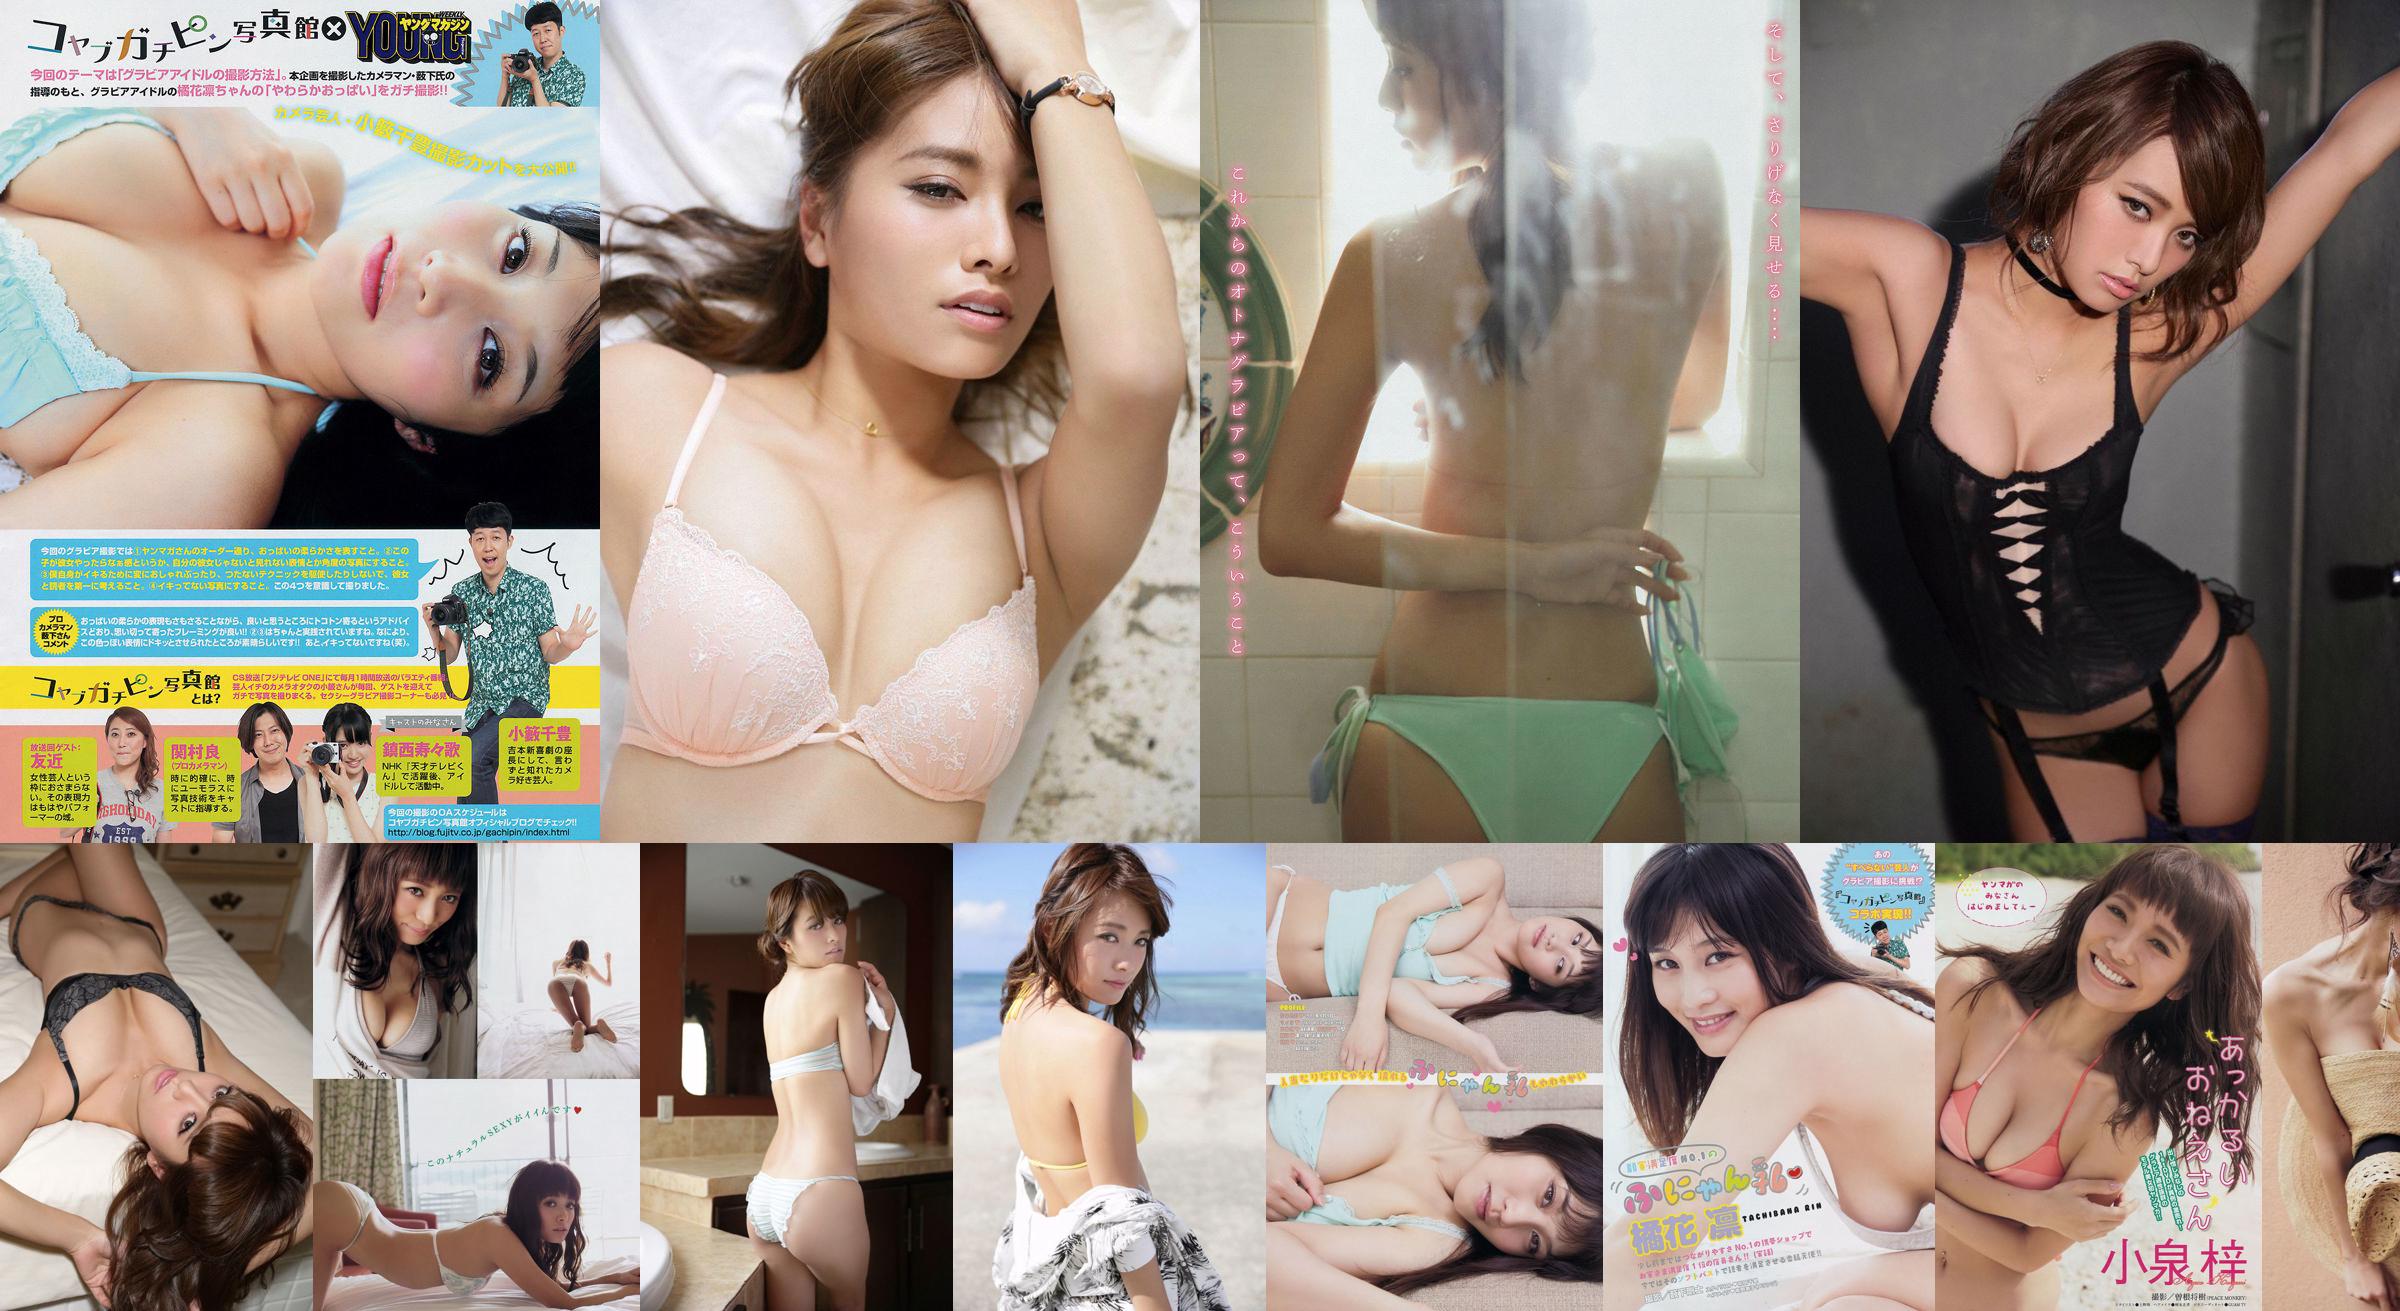 [Revista joven] Azusa Koizumi Tachibana Rin 2014 No 43 Revista fotográfica No.a45b8d Página 1